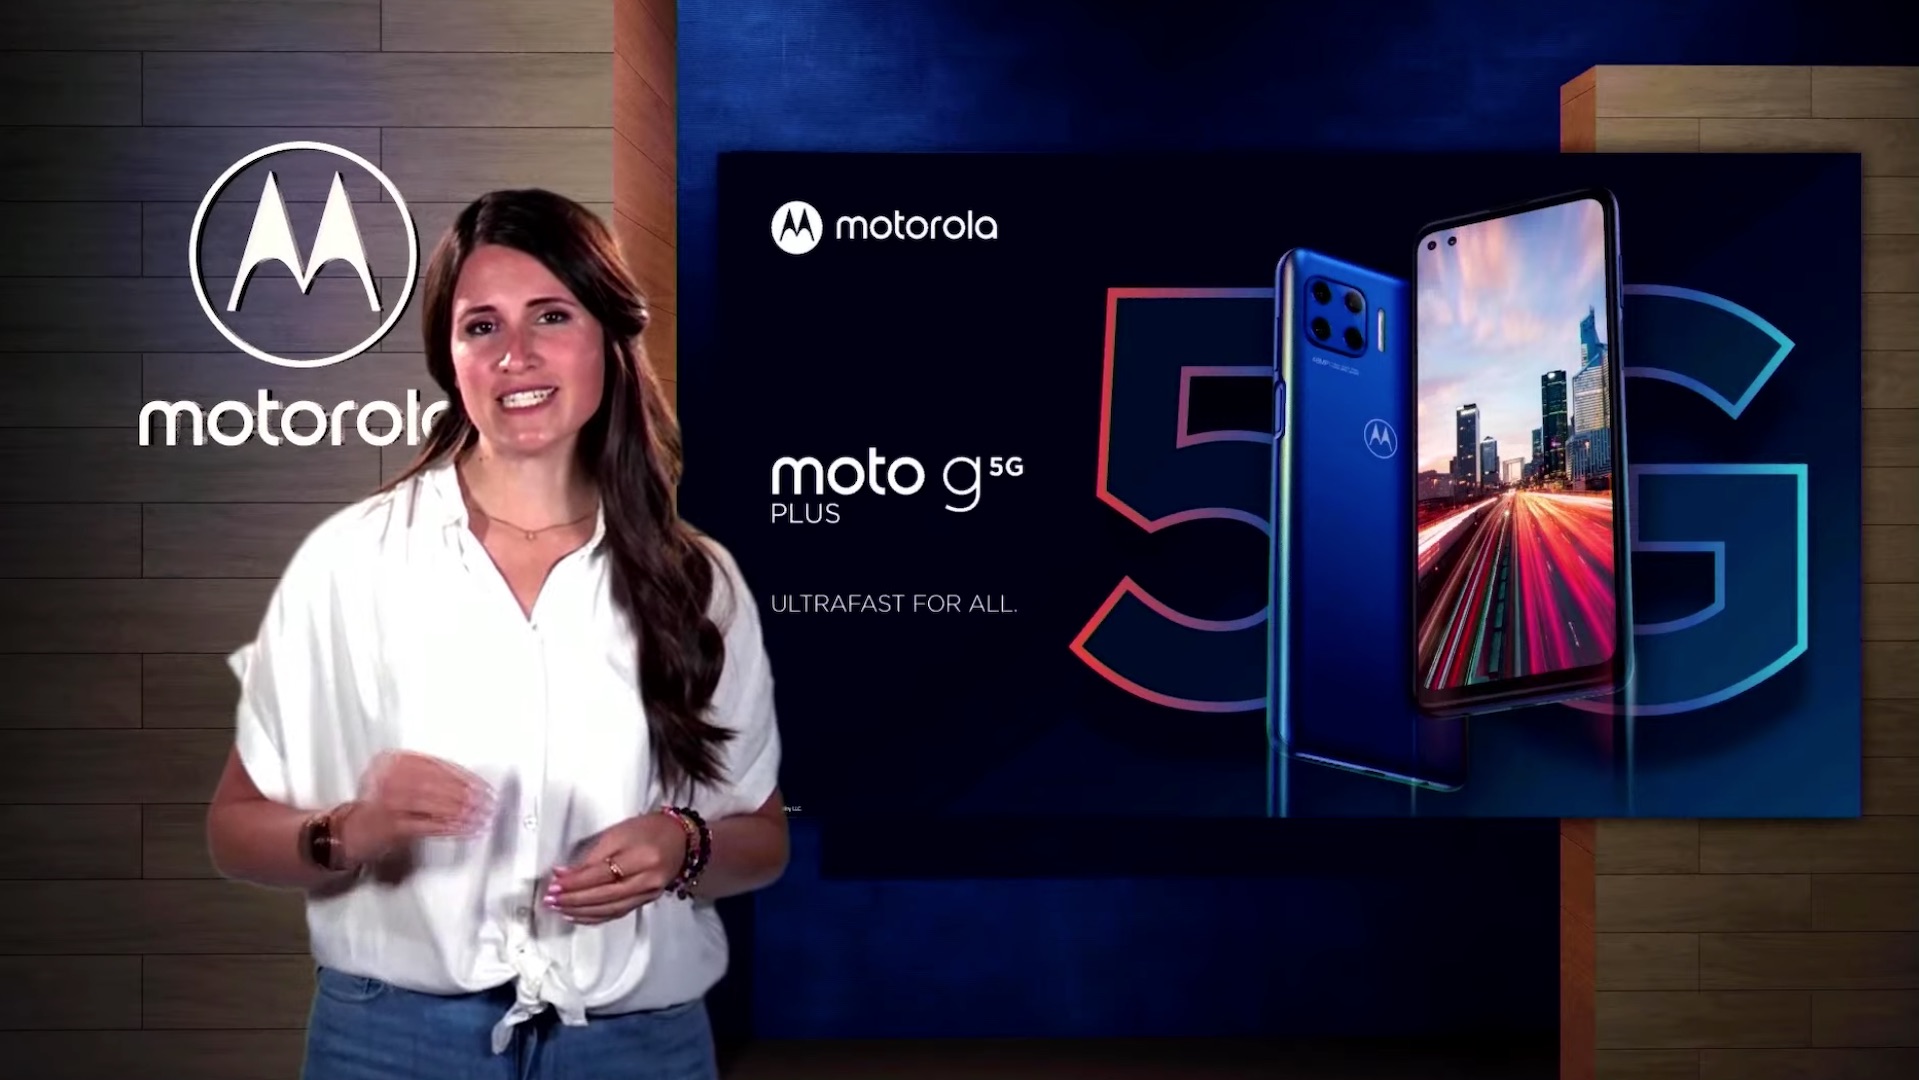 Prisbillig 5G-mobil fra Motorola